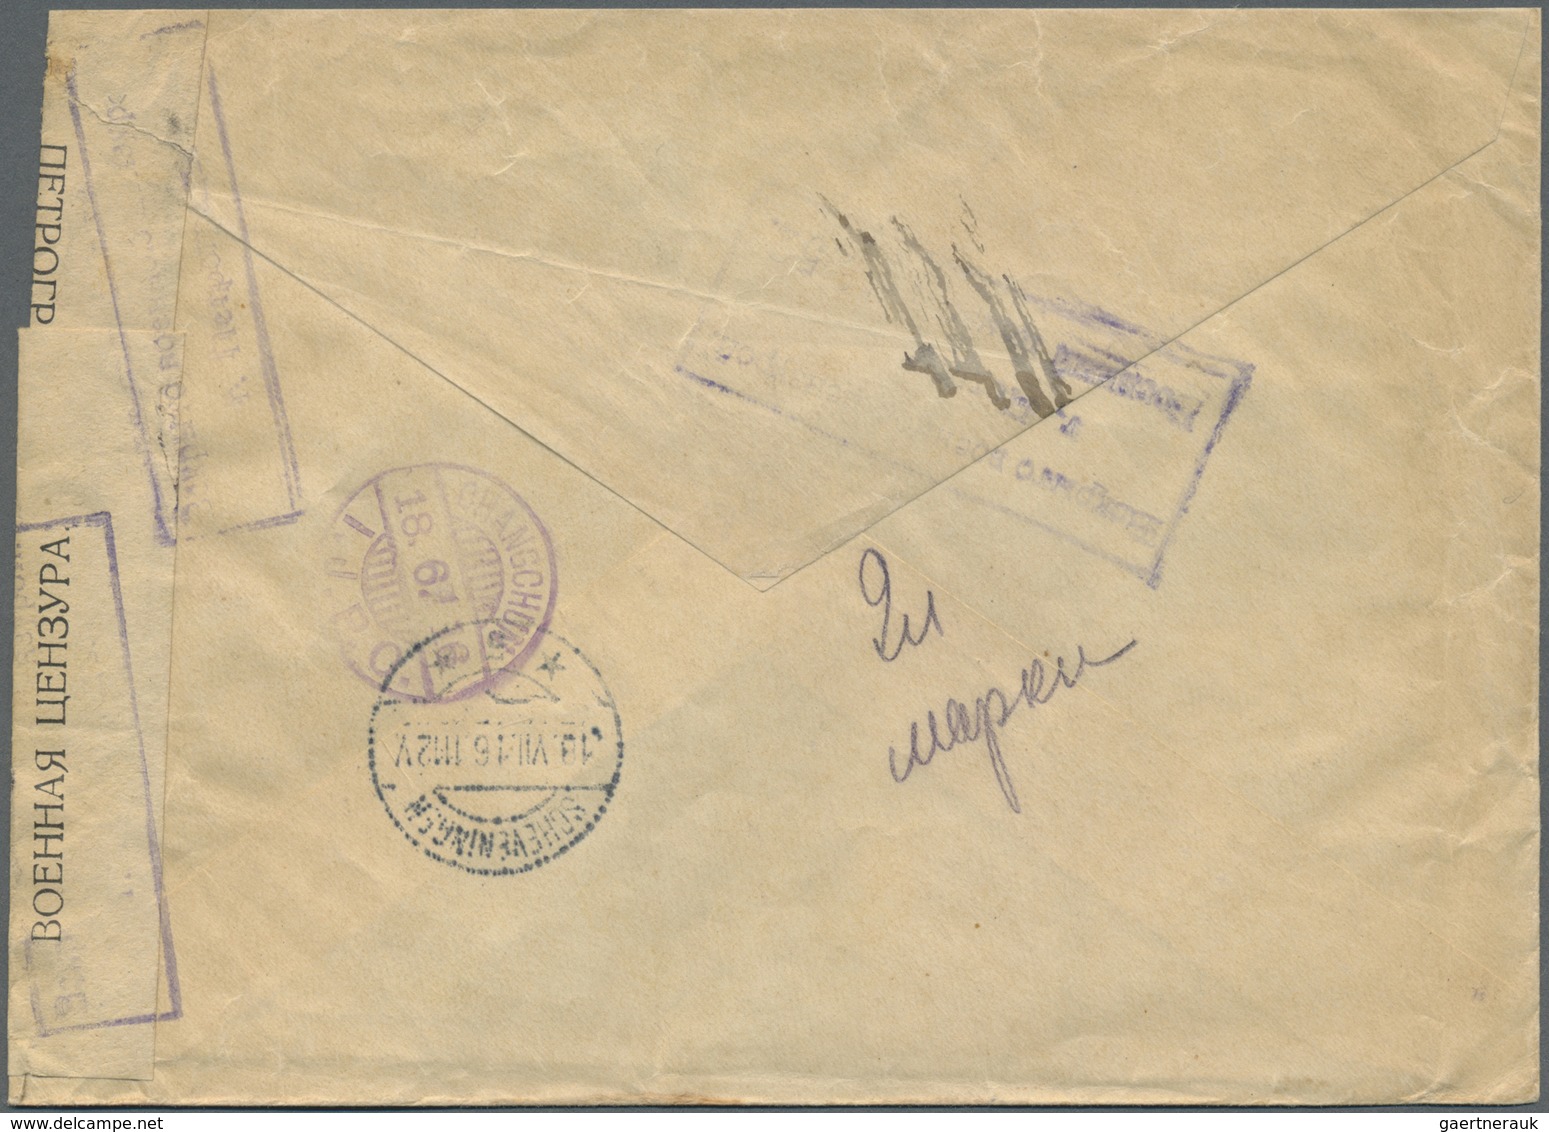 Br Japanische Post In China: 1916. Registered Envelope Addressed To Holland Bearing Japanese Post Offic - 1943-45 Shanghai & Nanjing